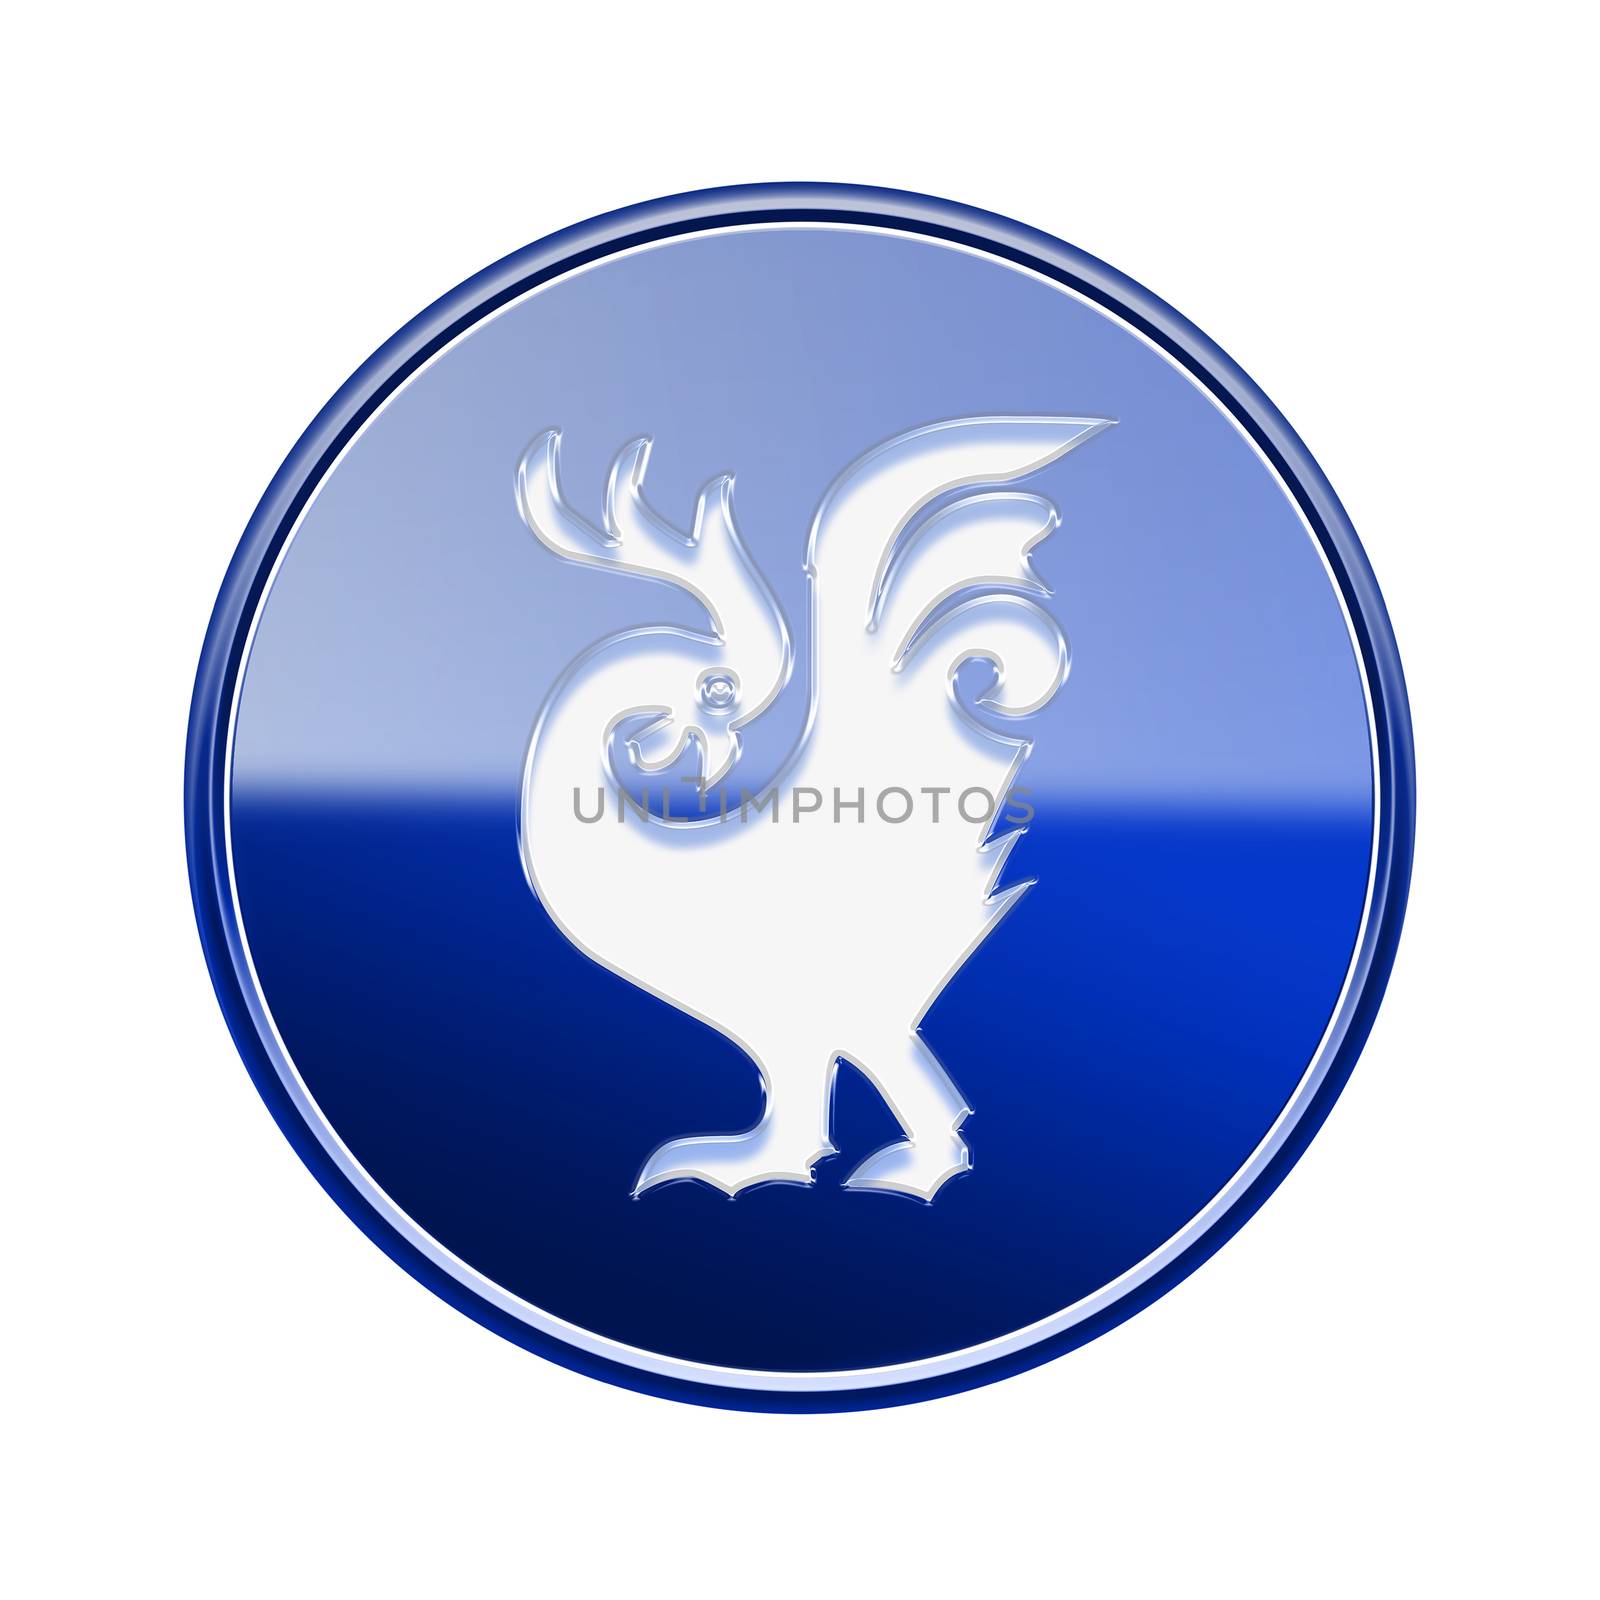 Cock Zodiac icon blue, isolated on white background.